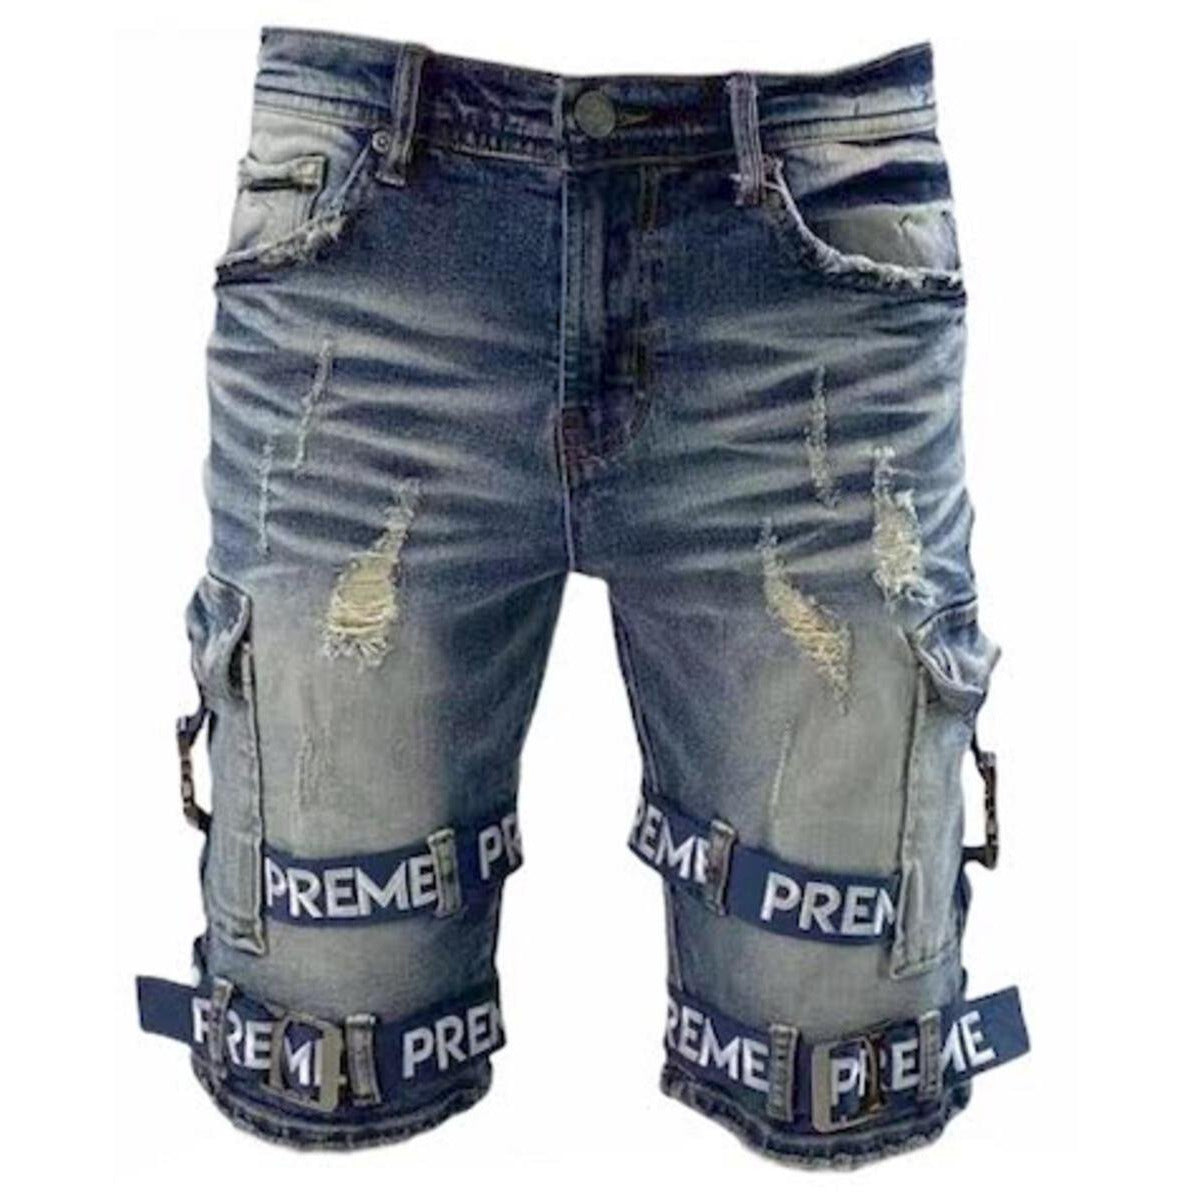 Preme Cargo Shorts with Preme Strap - Indigo (PR-WB-805)